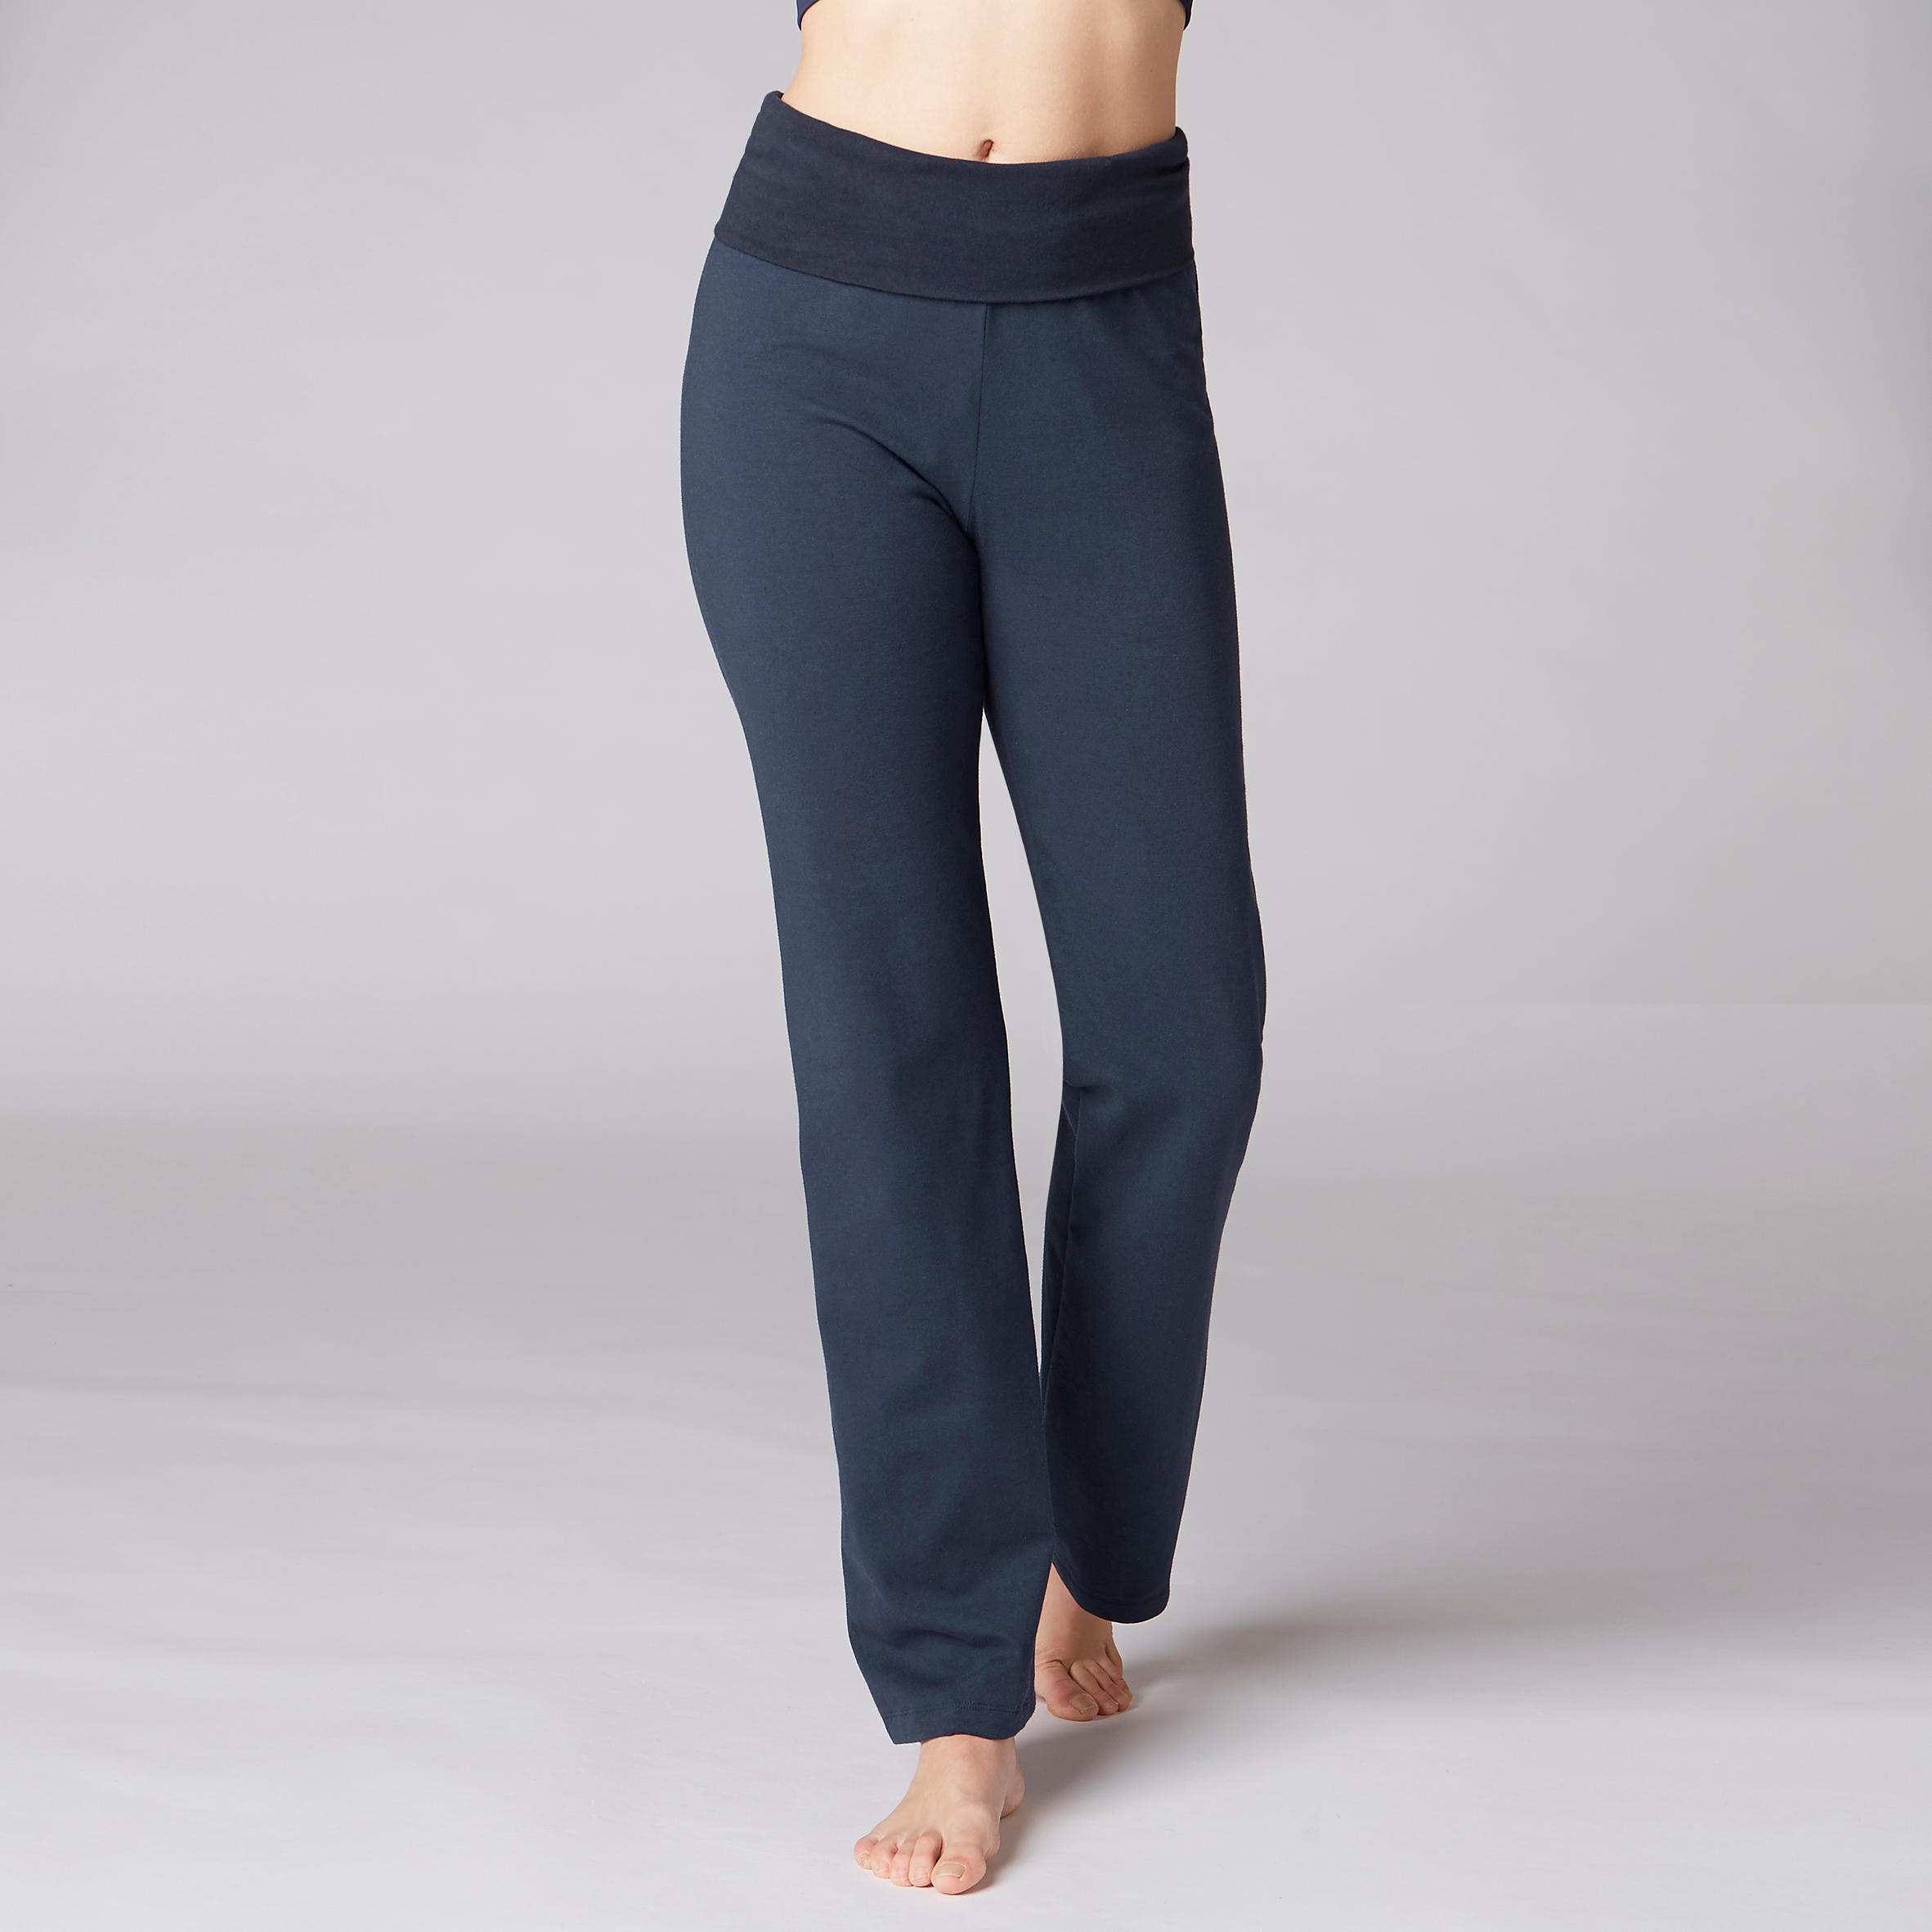 TOOPOOT Yoga Pants for Women Ladies High Waist Yoga Short Abdomen Control Training Running Yoga Pants 